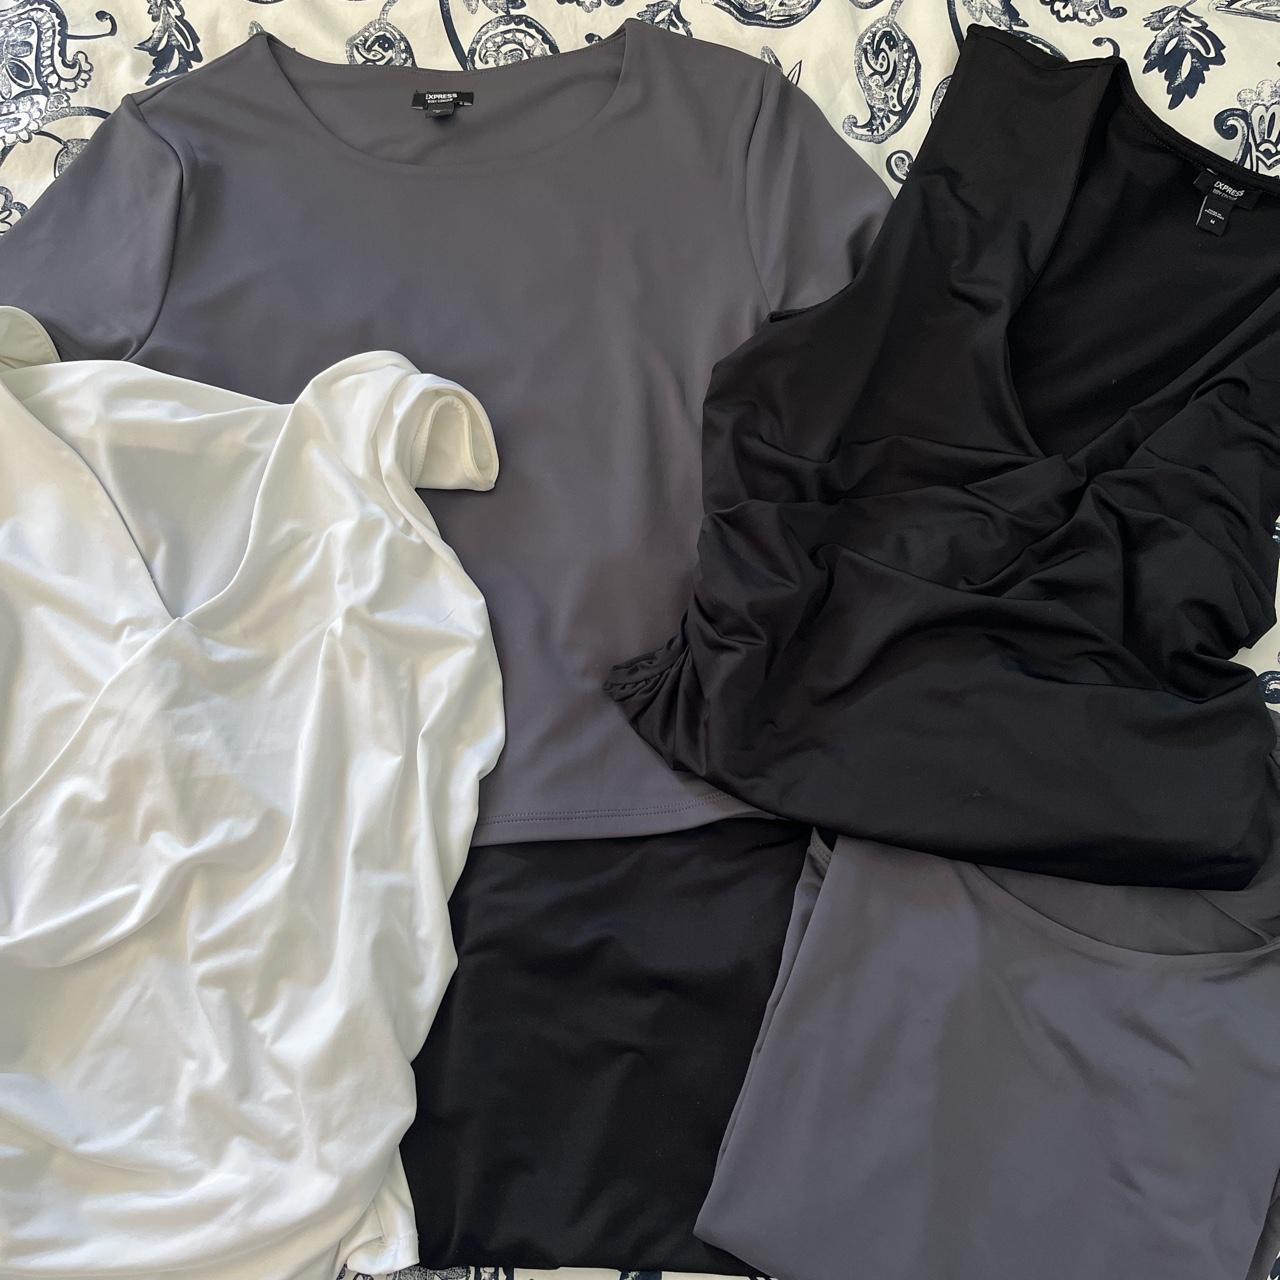 Express Women's Black and White Shirt | Depop